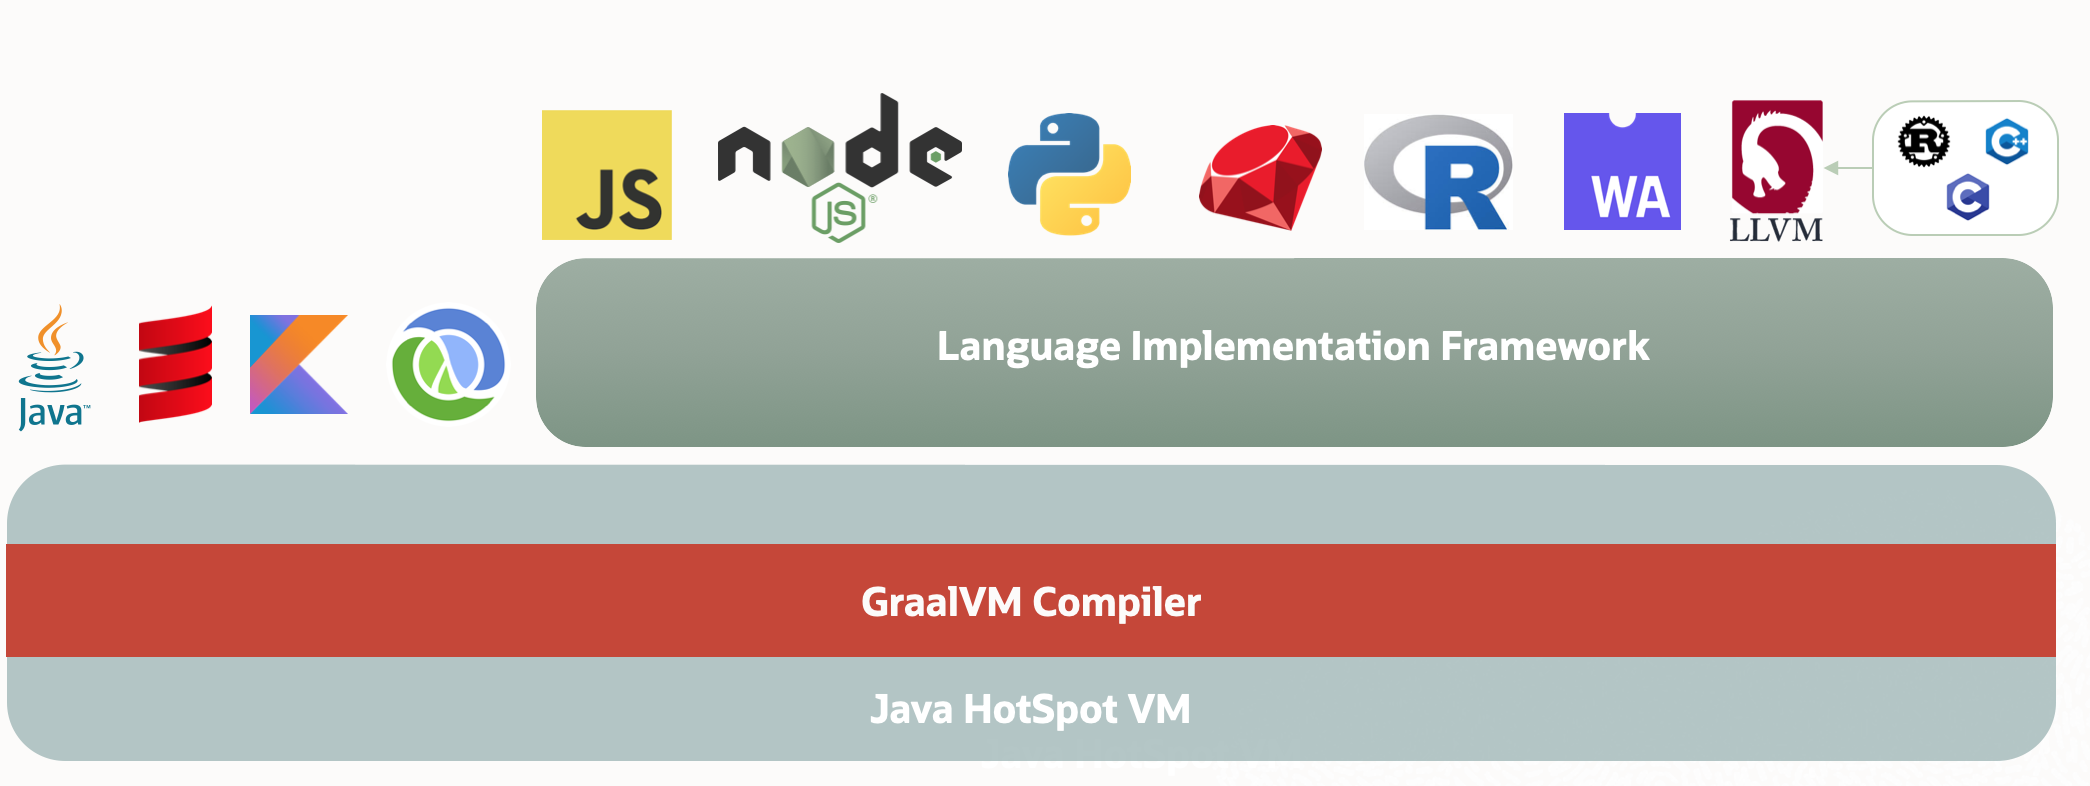 Java hotspot. GRAALVM. GRAALVM Enterprise Edition.